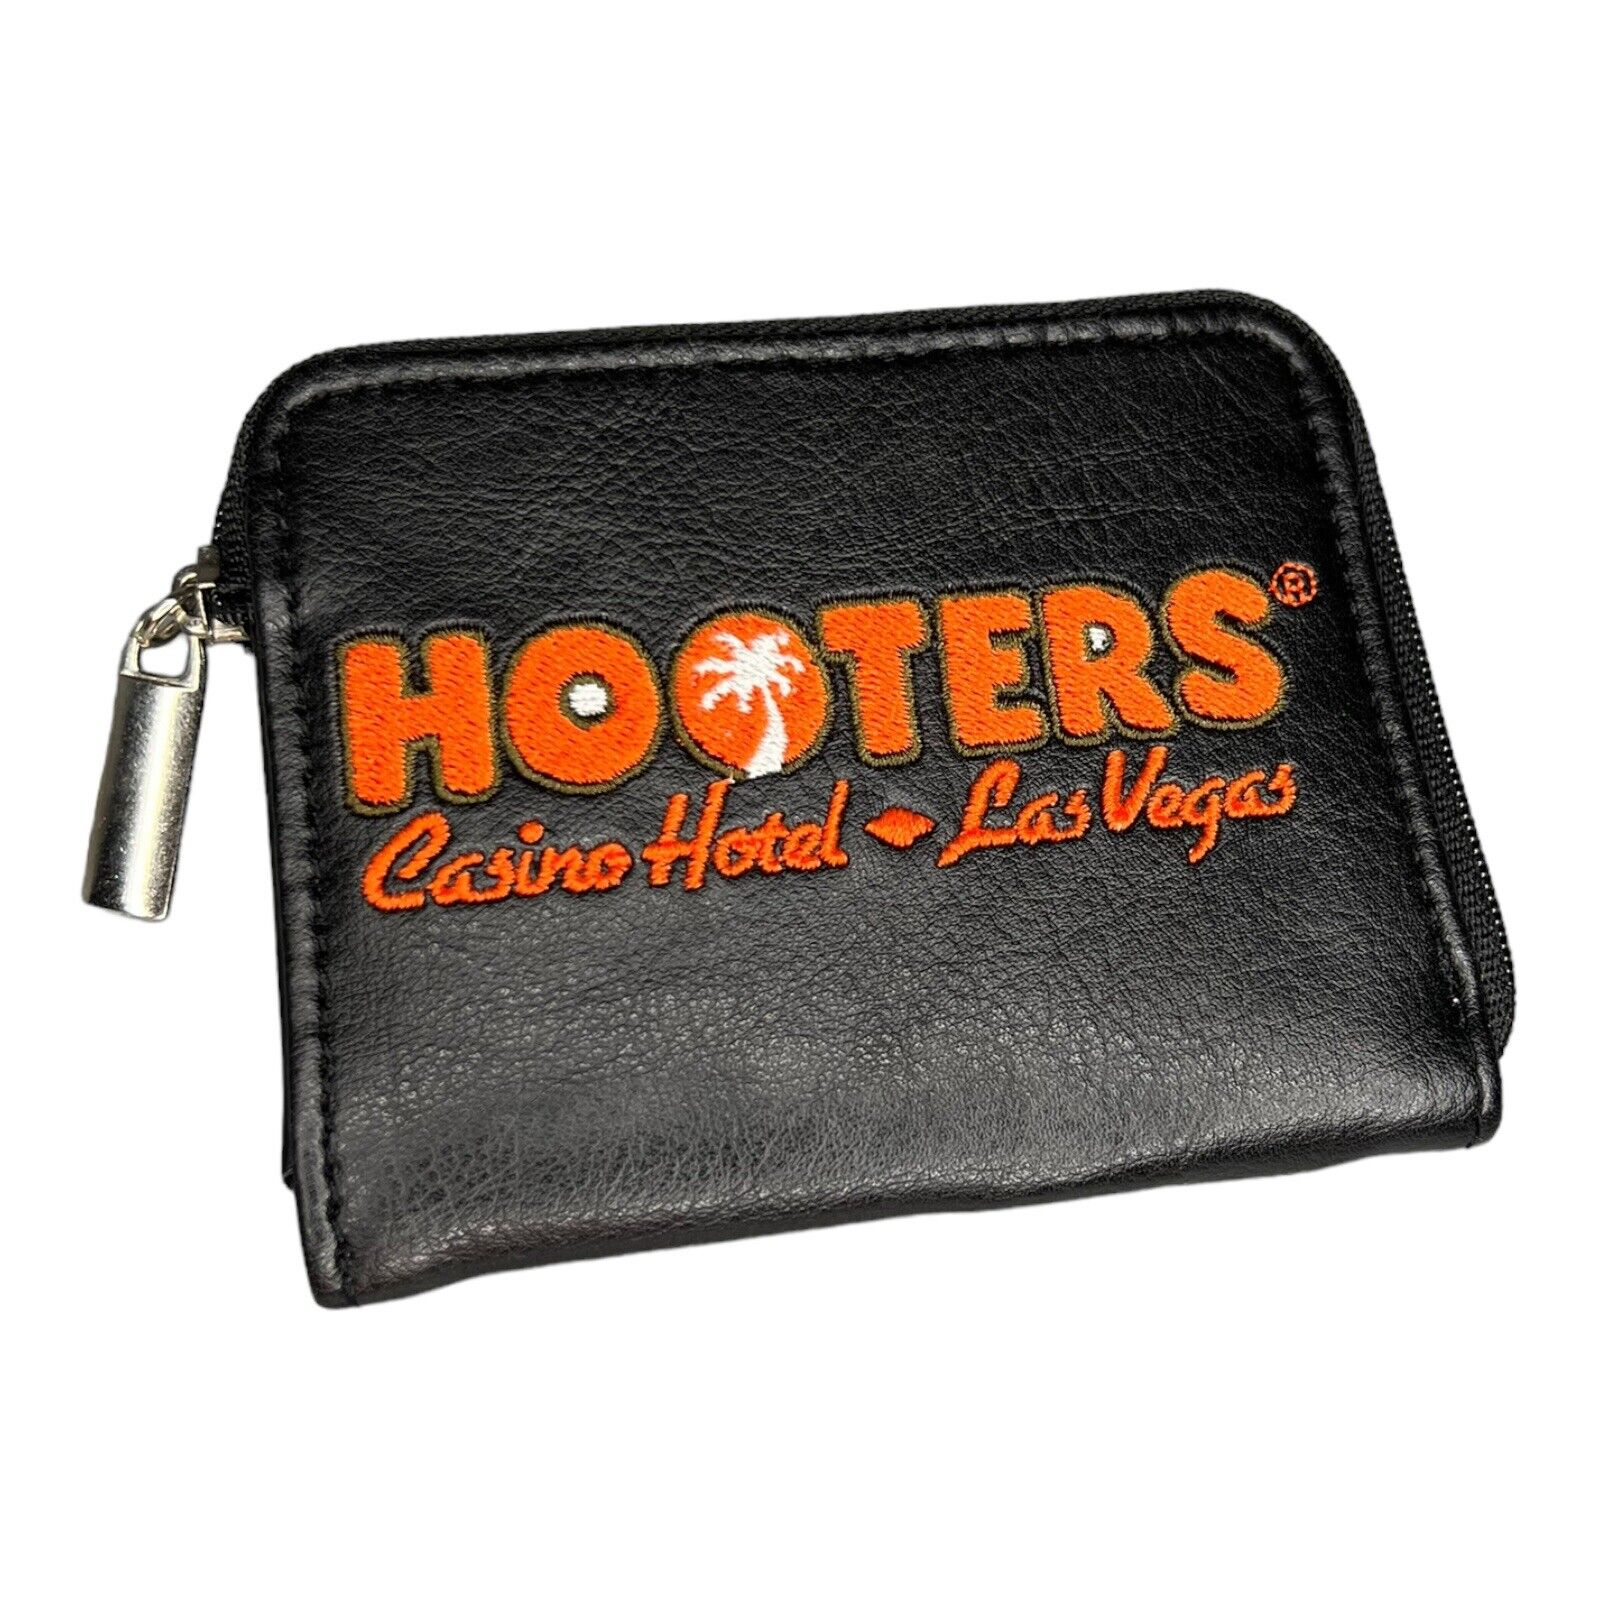 Hooters Casino Hotel Las Vegas Black Leather Zip Up Wallet